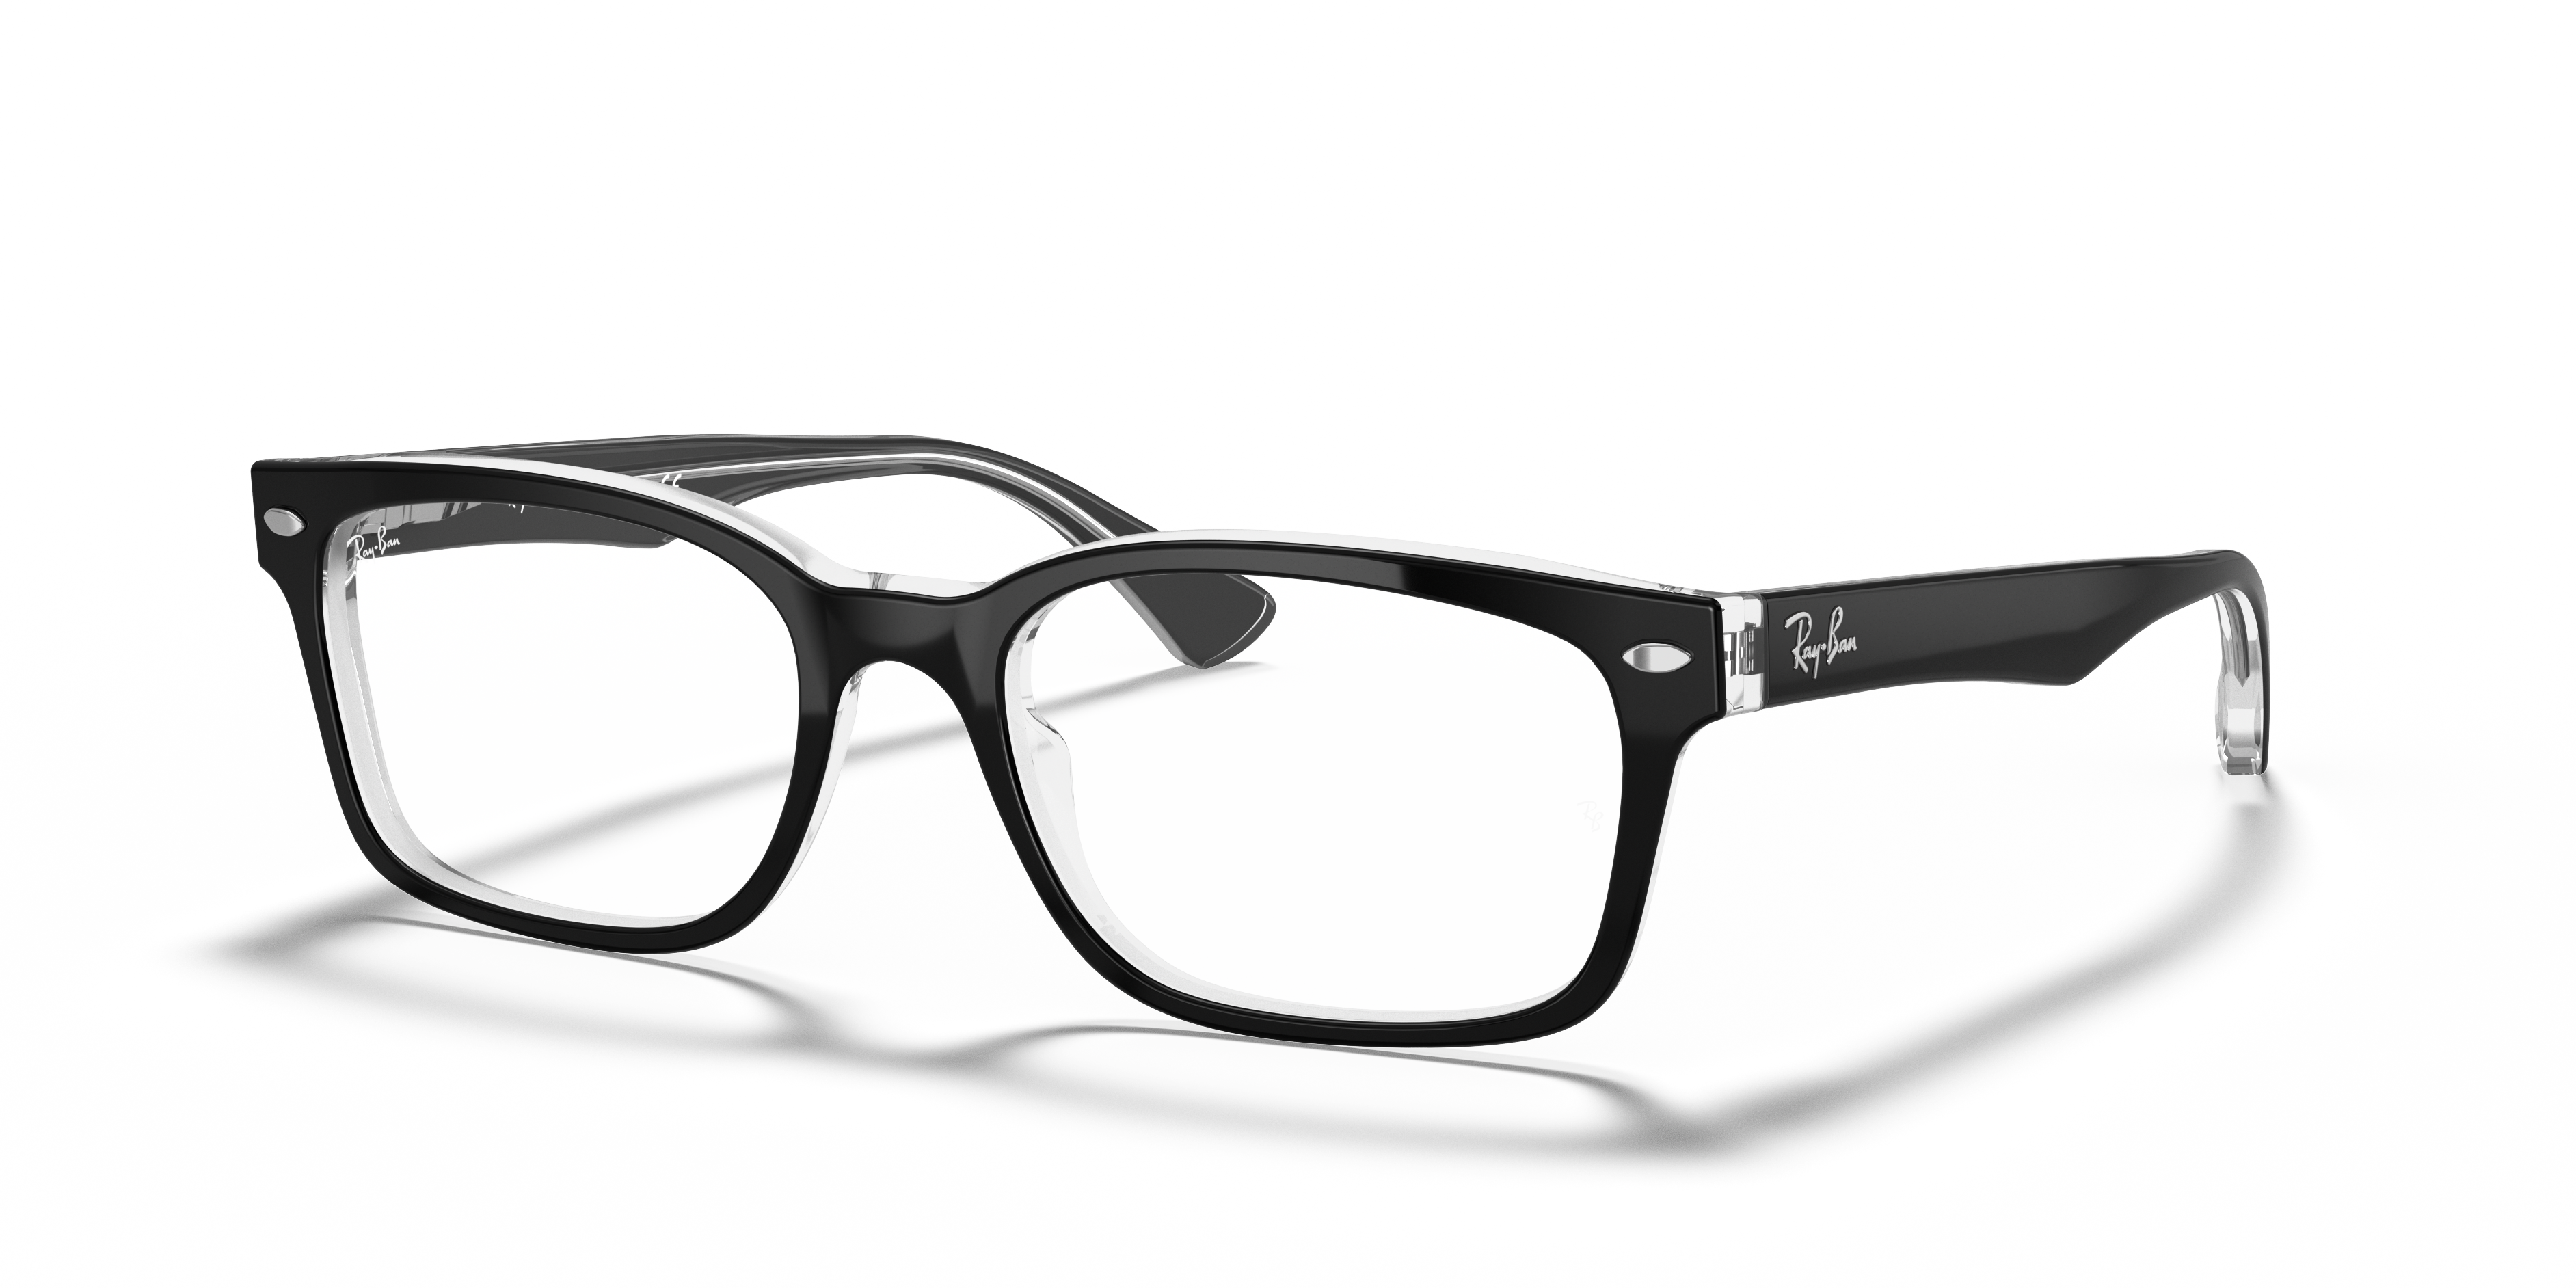 Rb5286 Optics Eyeglasses with Black On Transparent Frame | Ray-Ban®